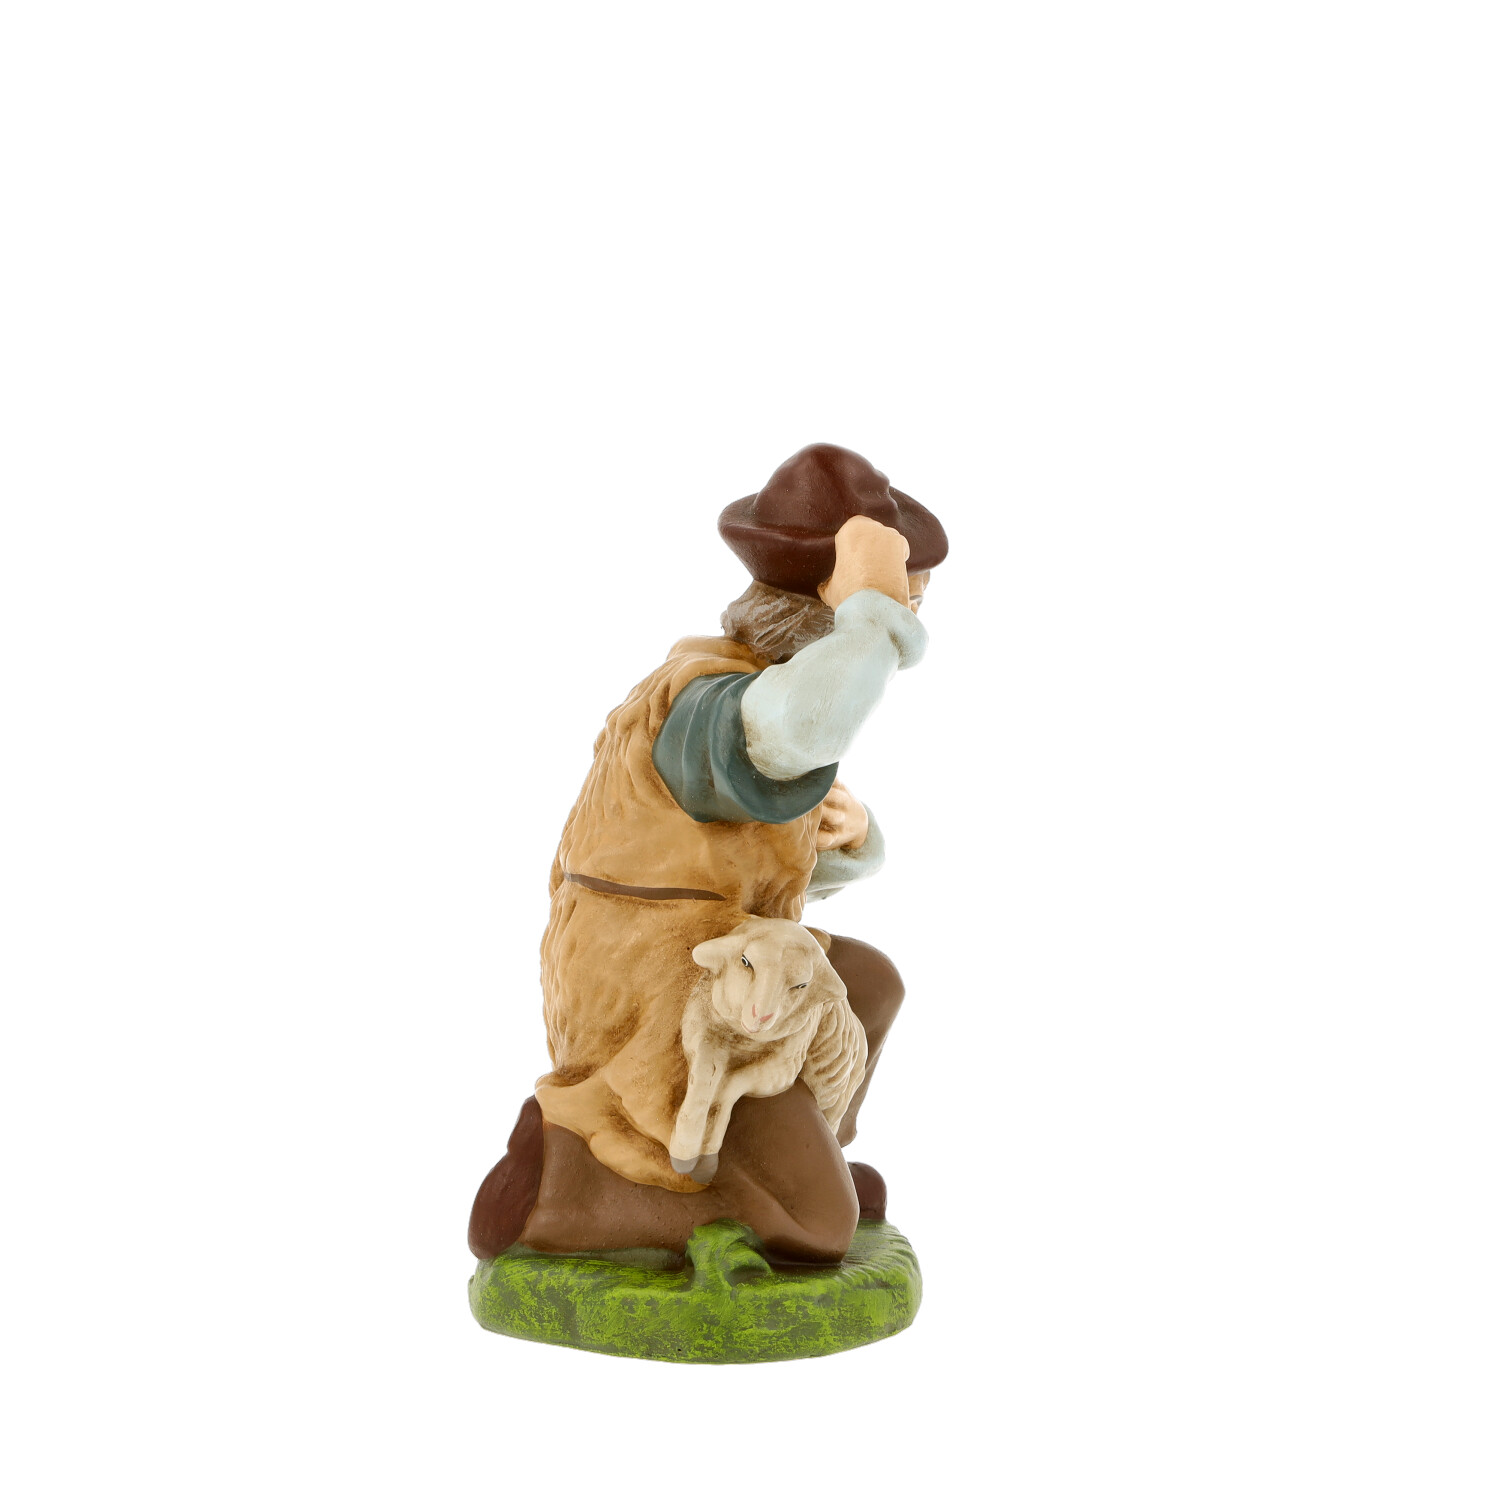 Kneeling shepherd with sheep - Marolin Nativity figure - made in Germany